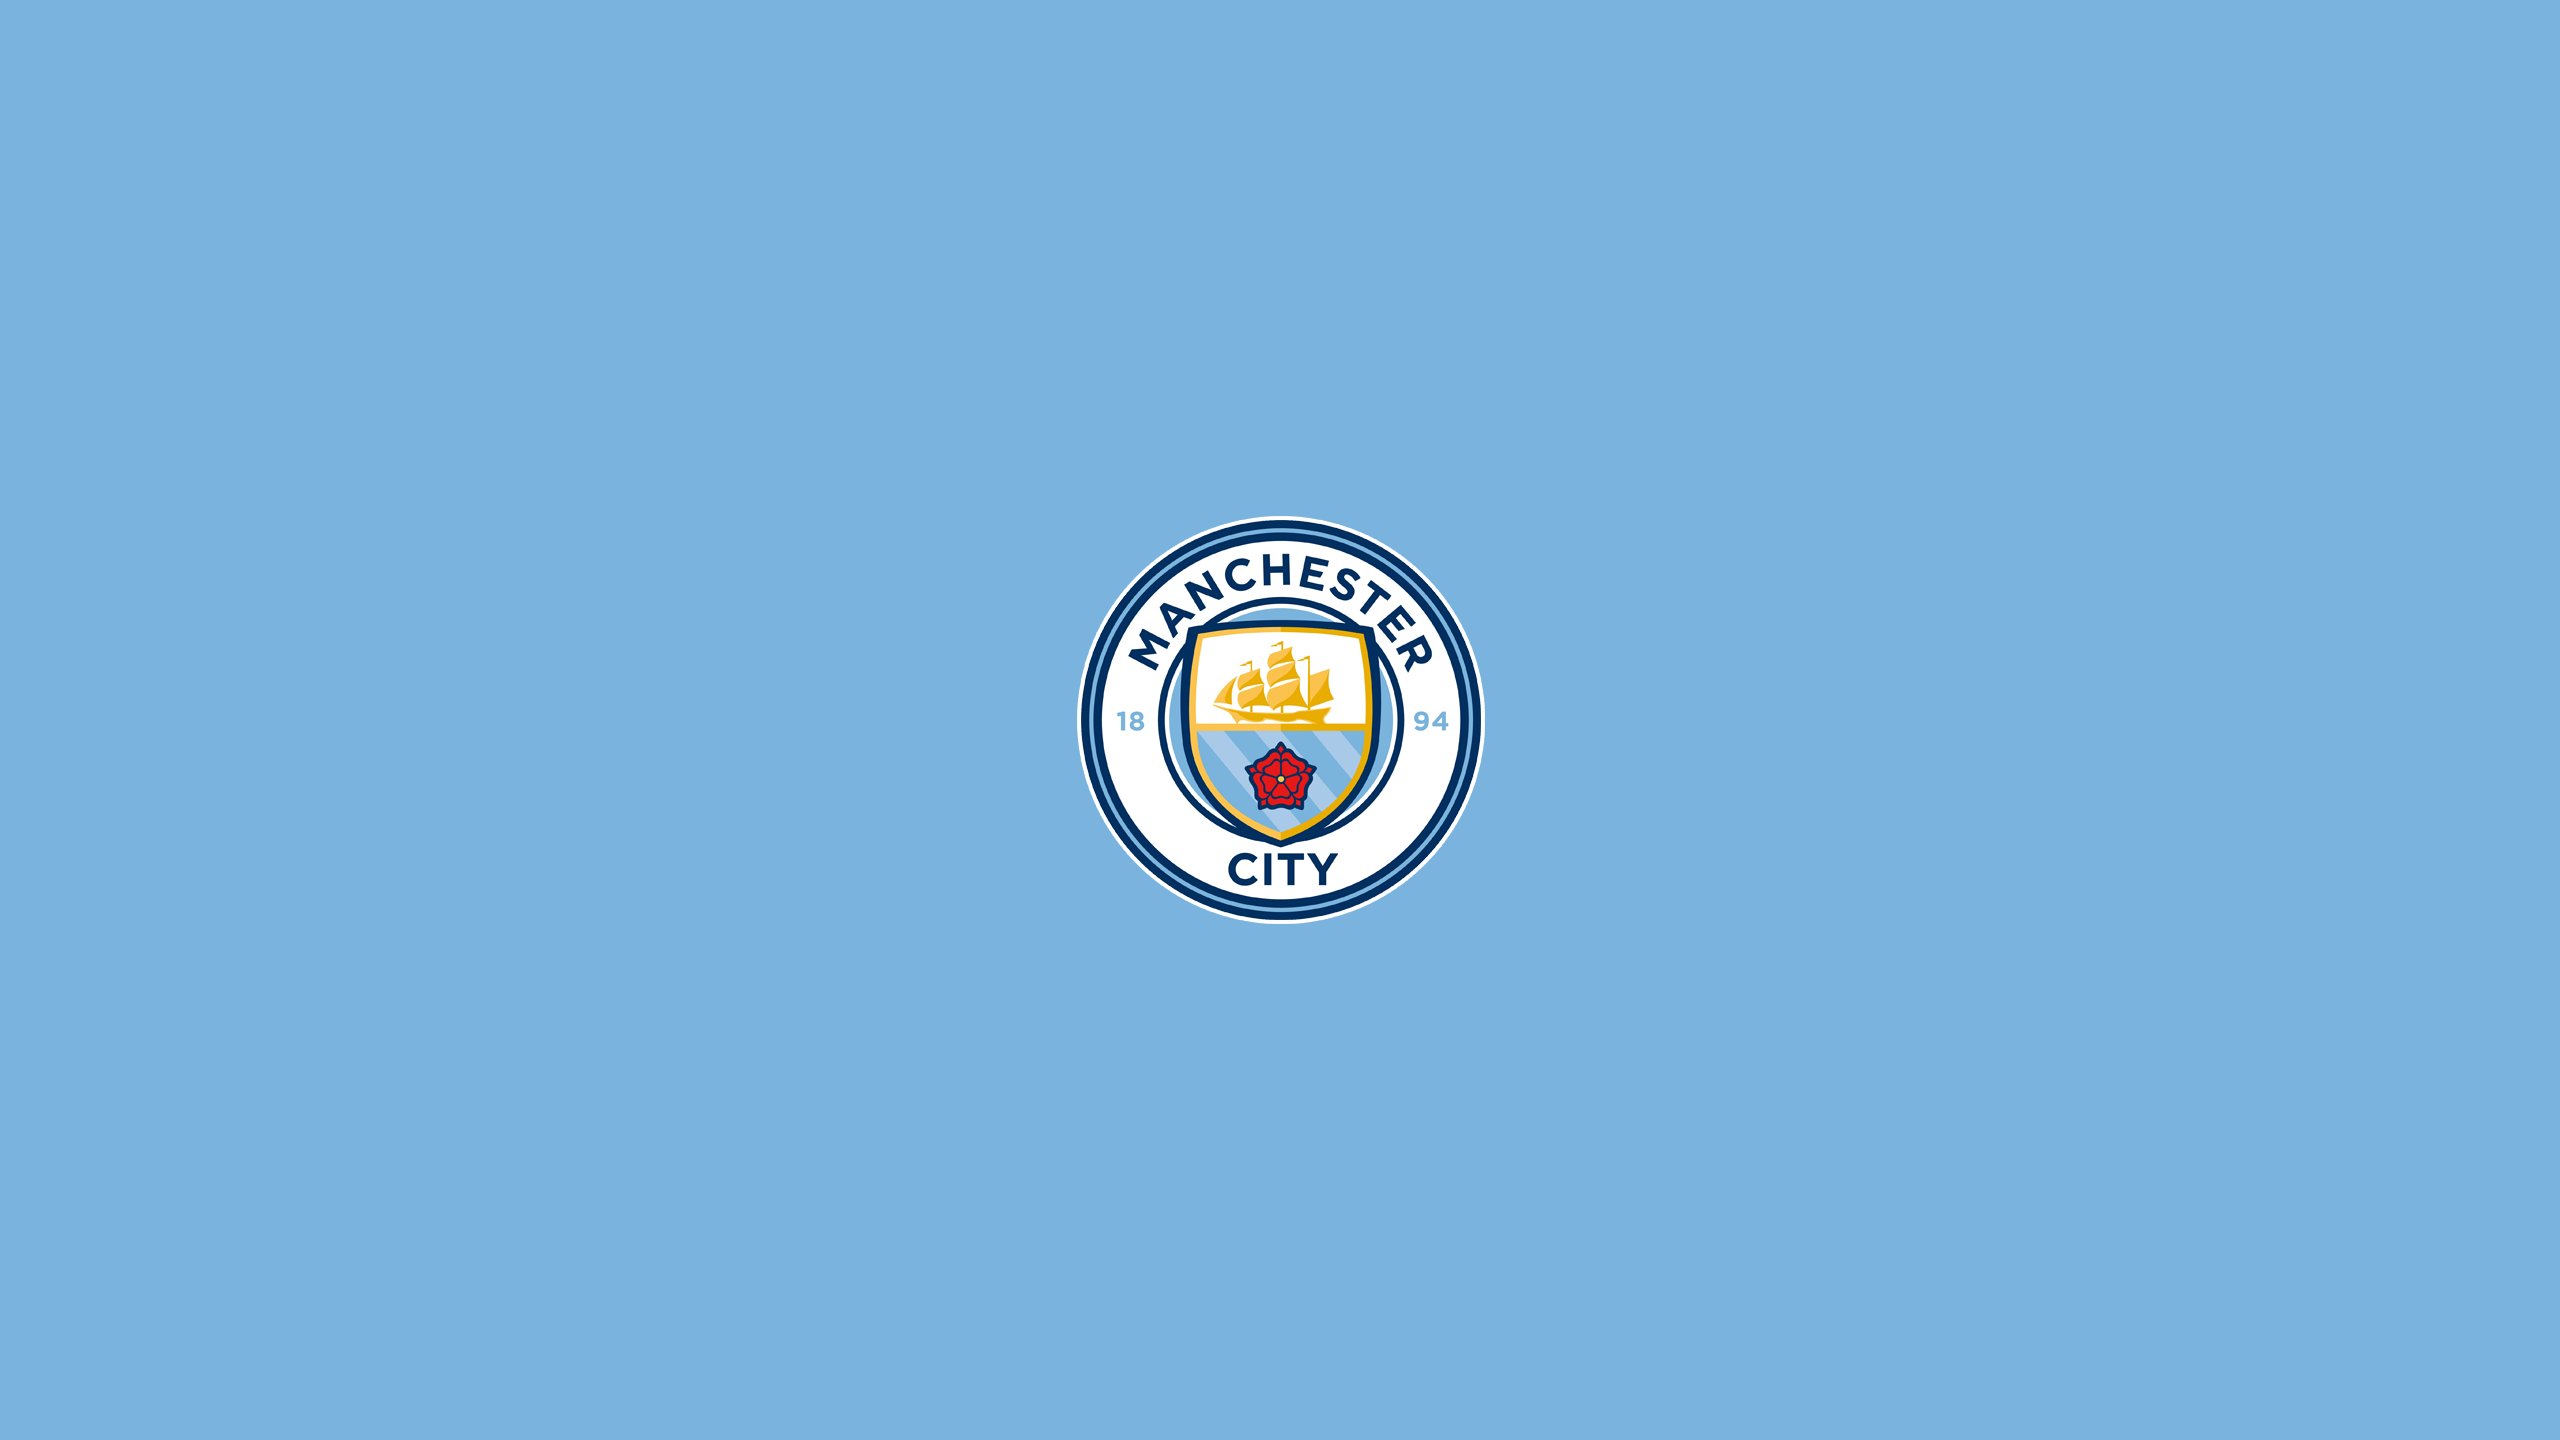 Manchester City F.C. - English Premier League - Soccer - Square Bettor